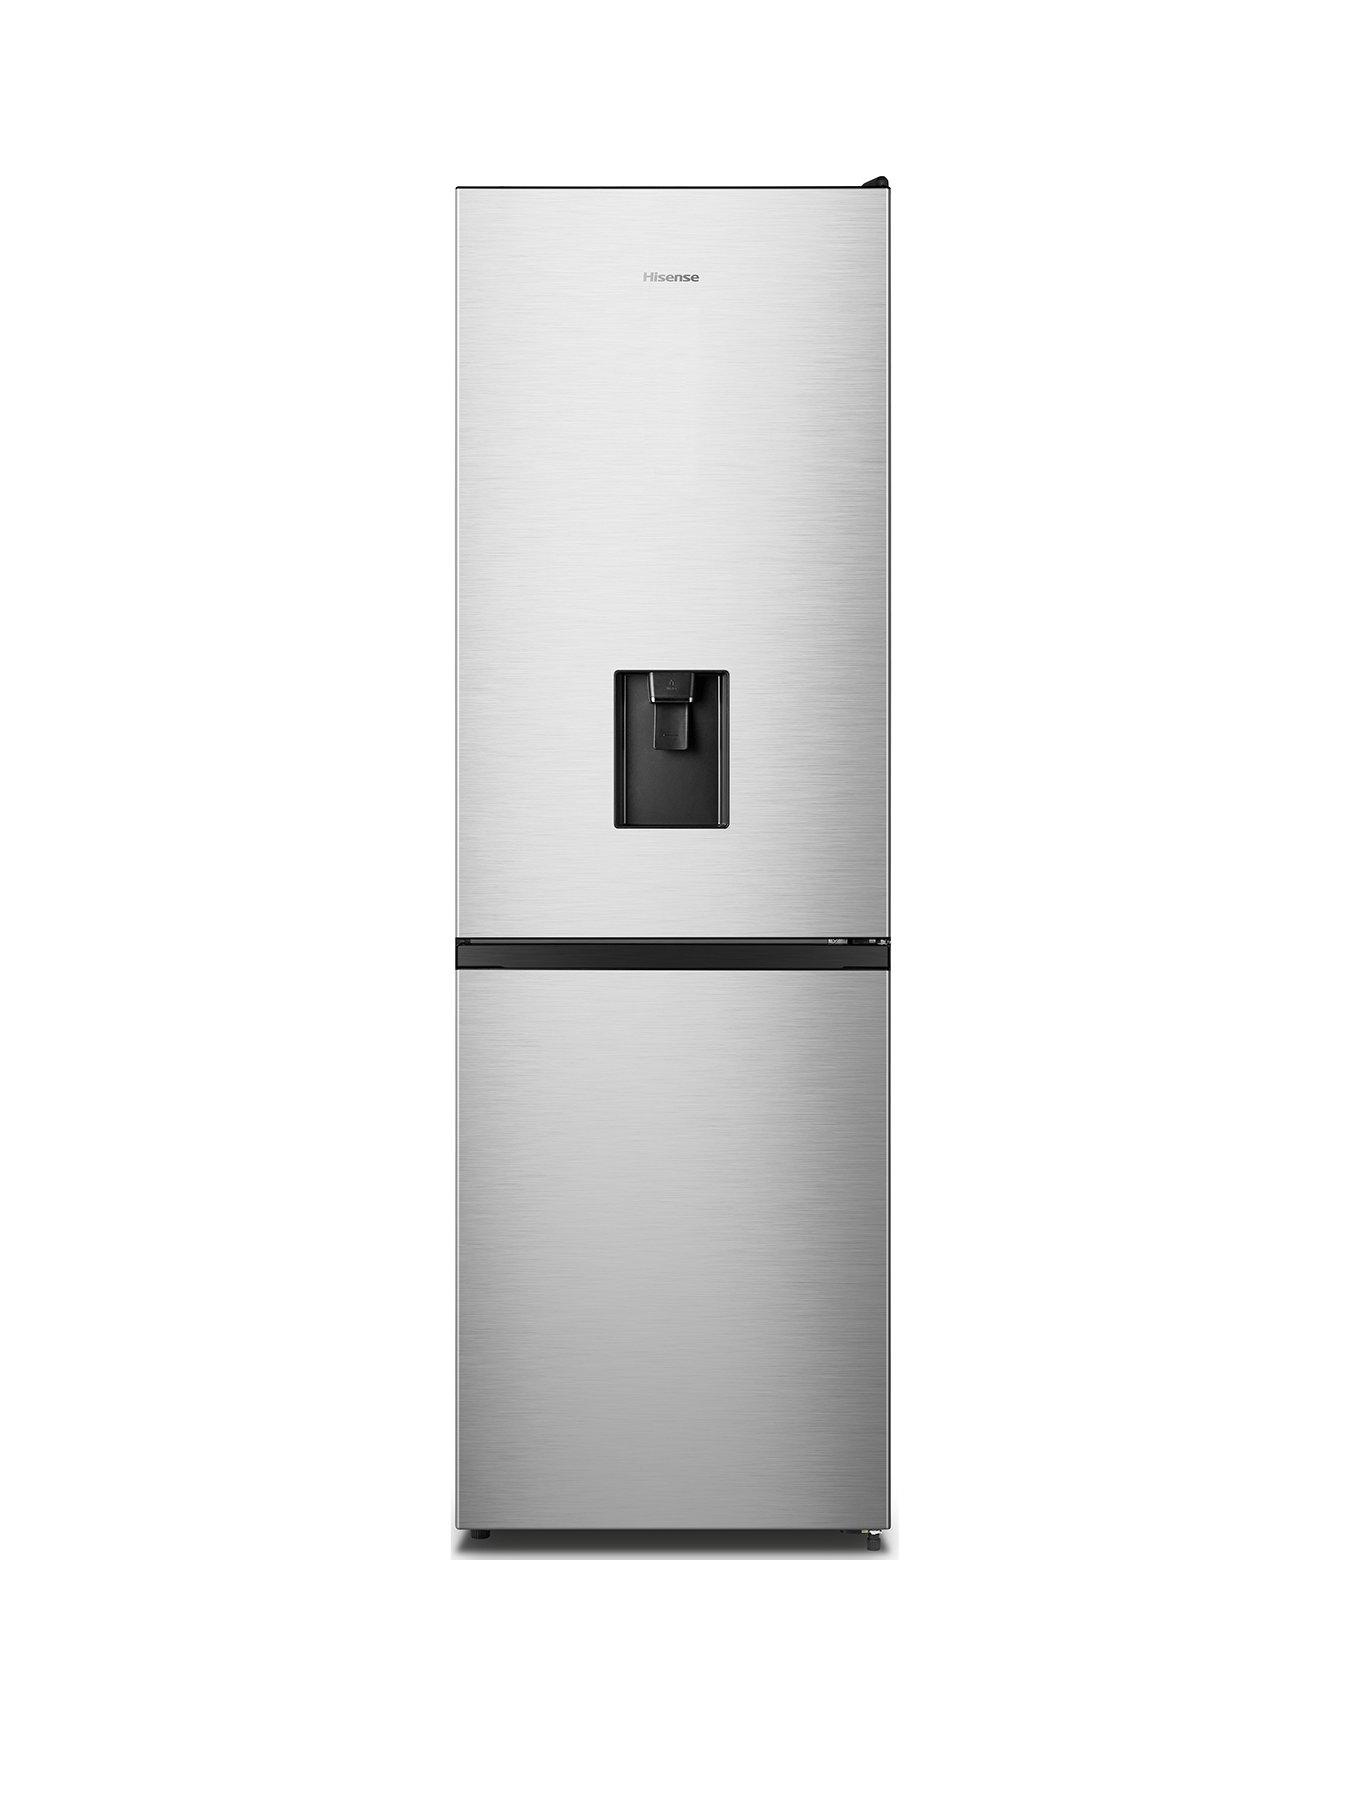 36+ Hisense fridge keeps freezing ideas